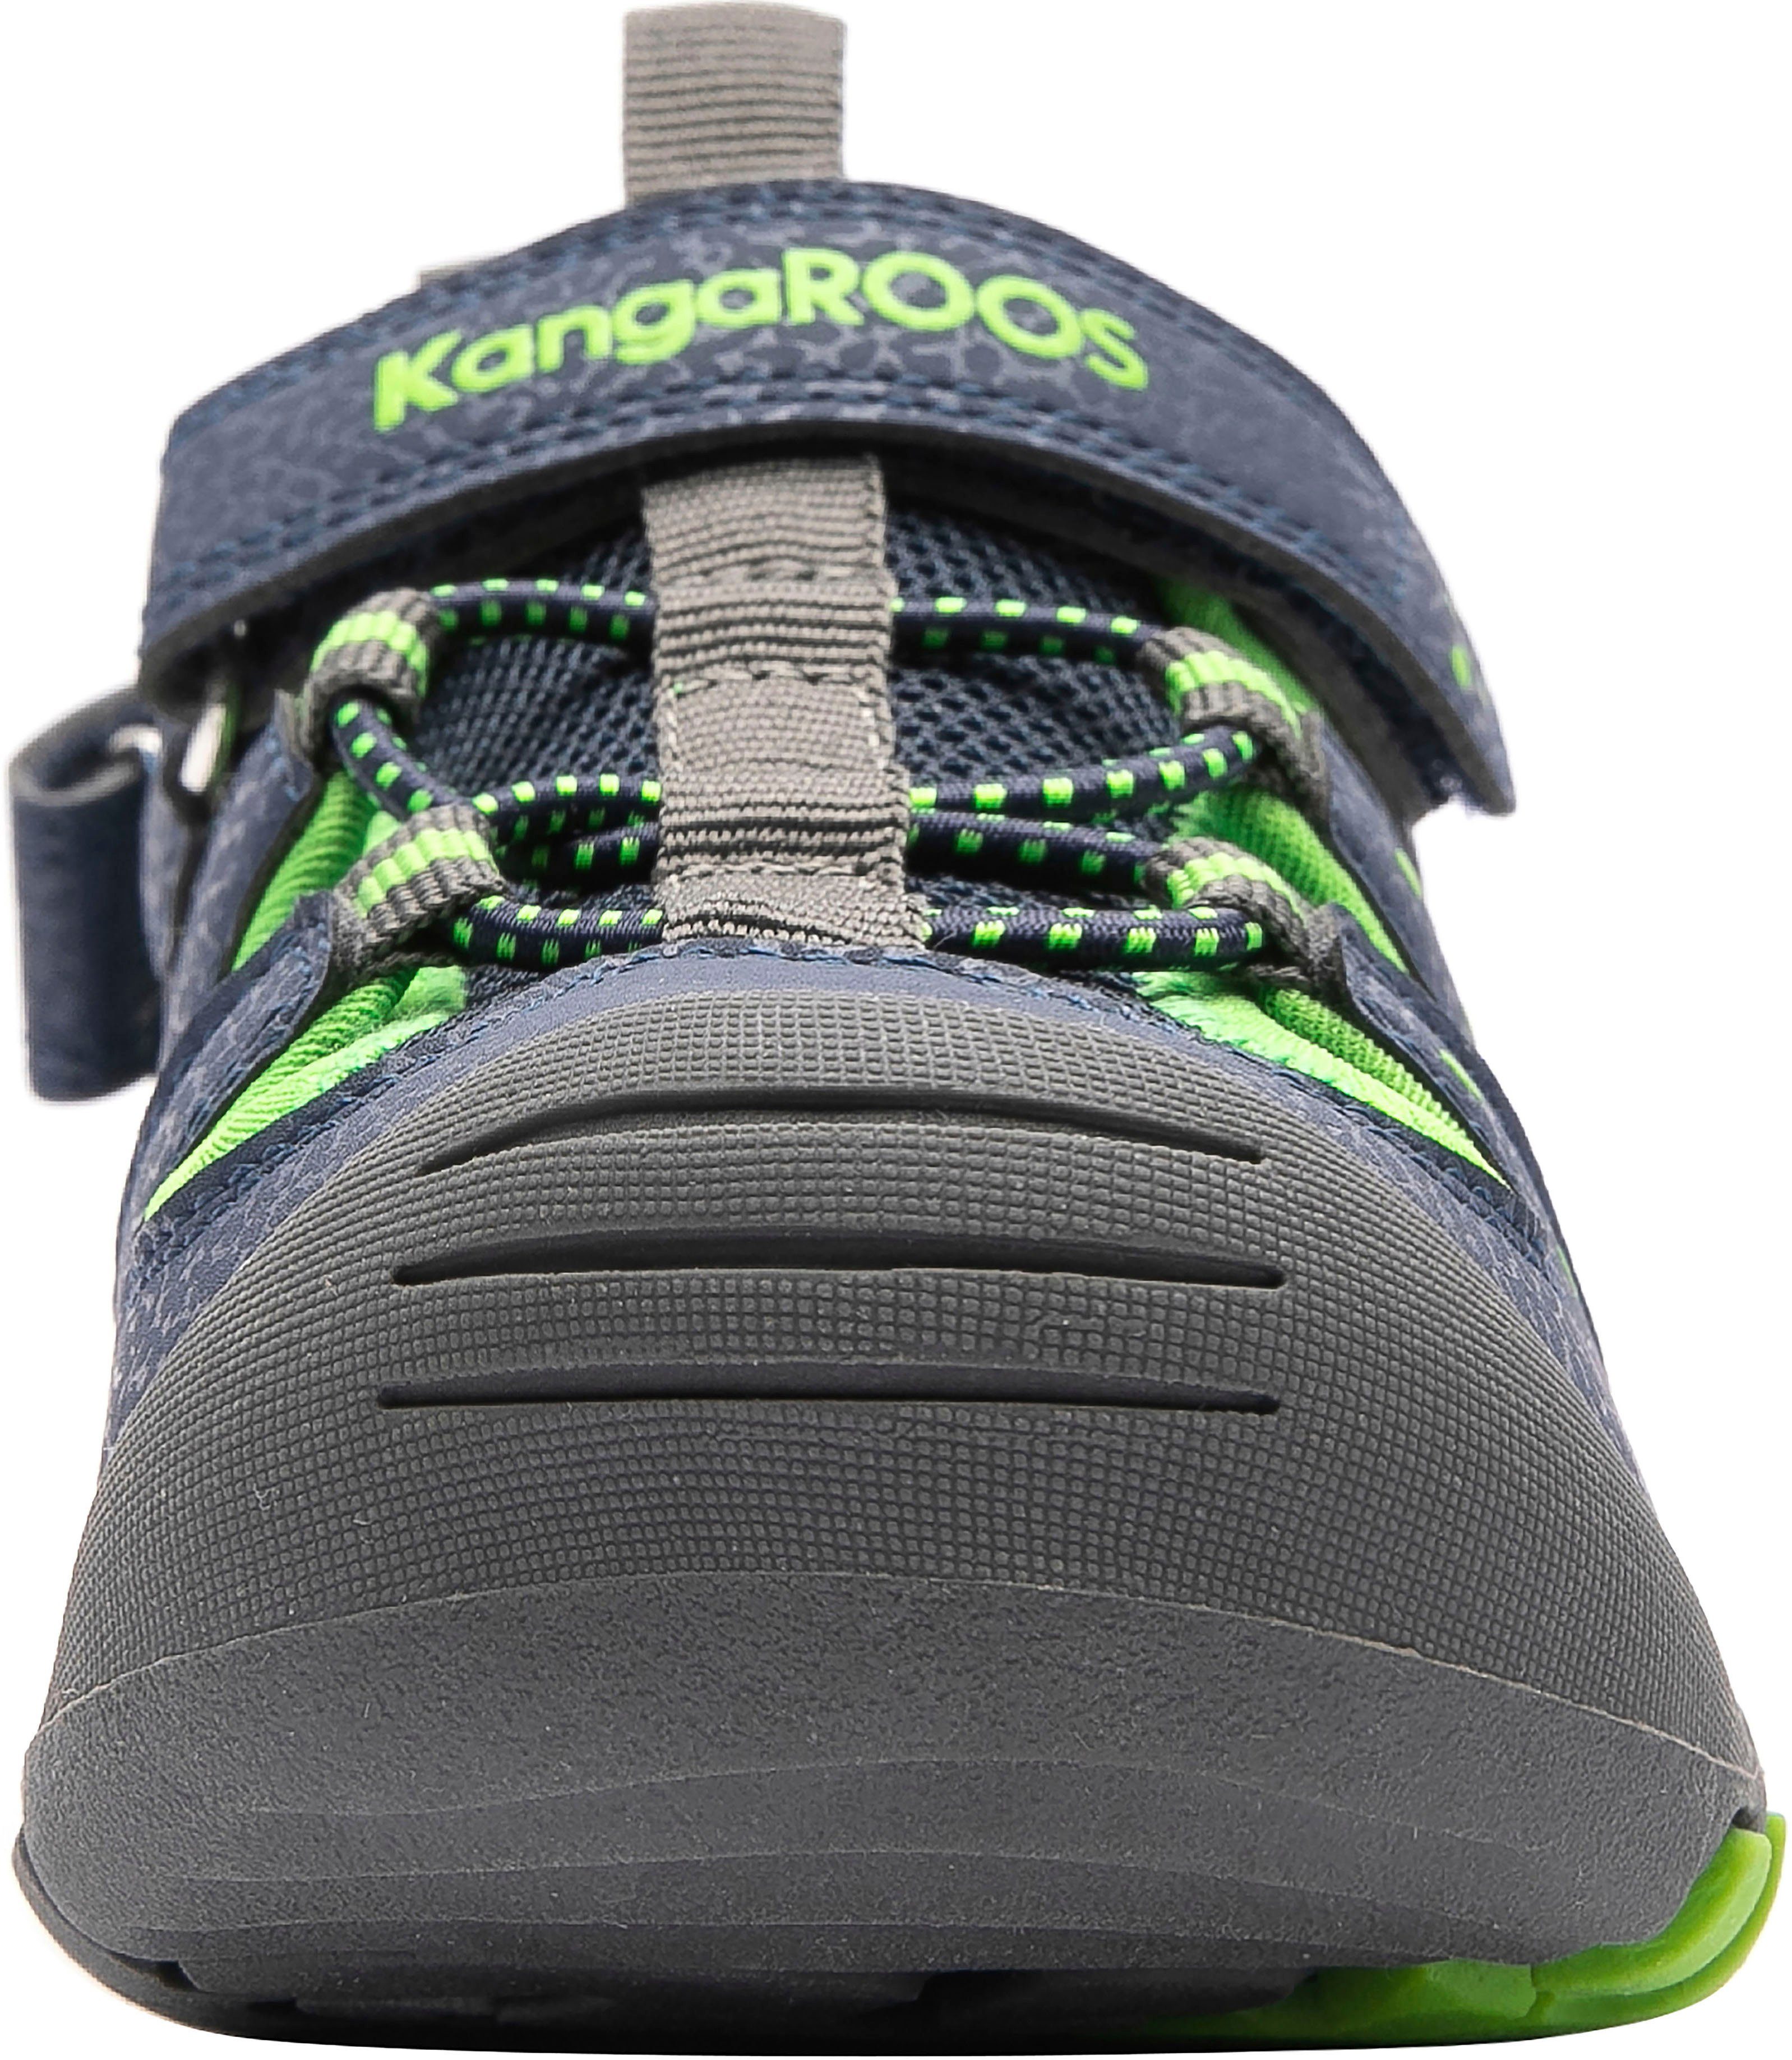 KangaROOS K-Trek Sandale Klettverschluss navy-lime mit